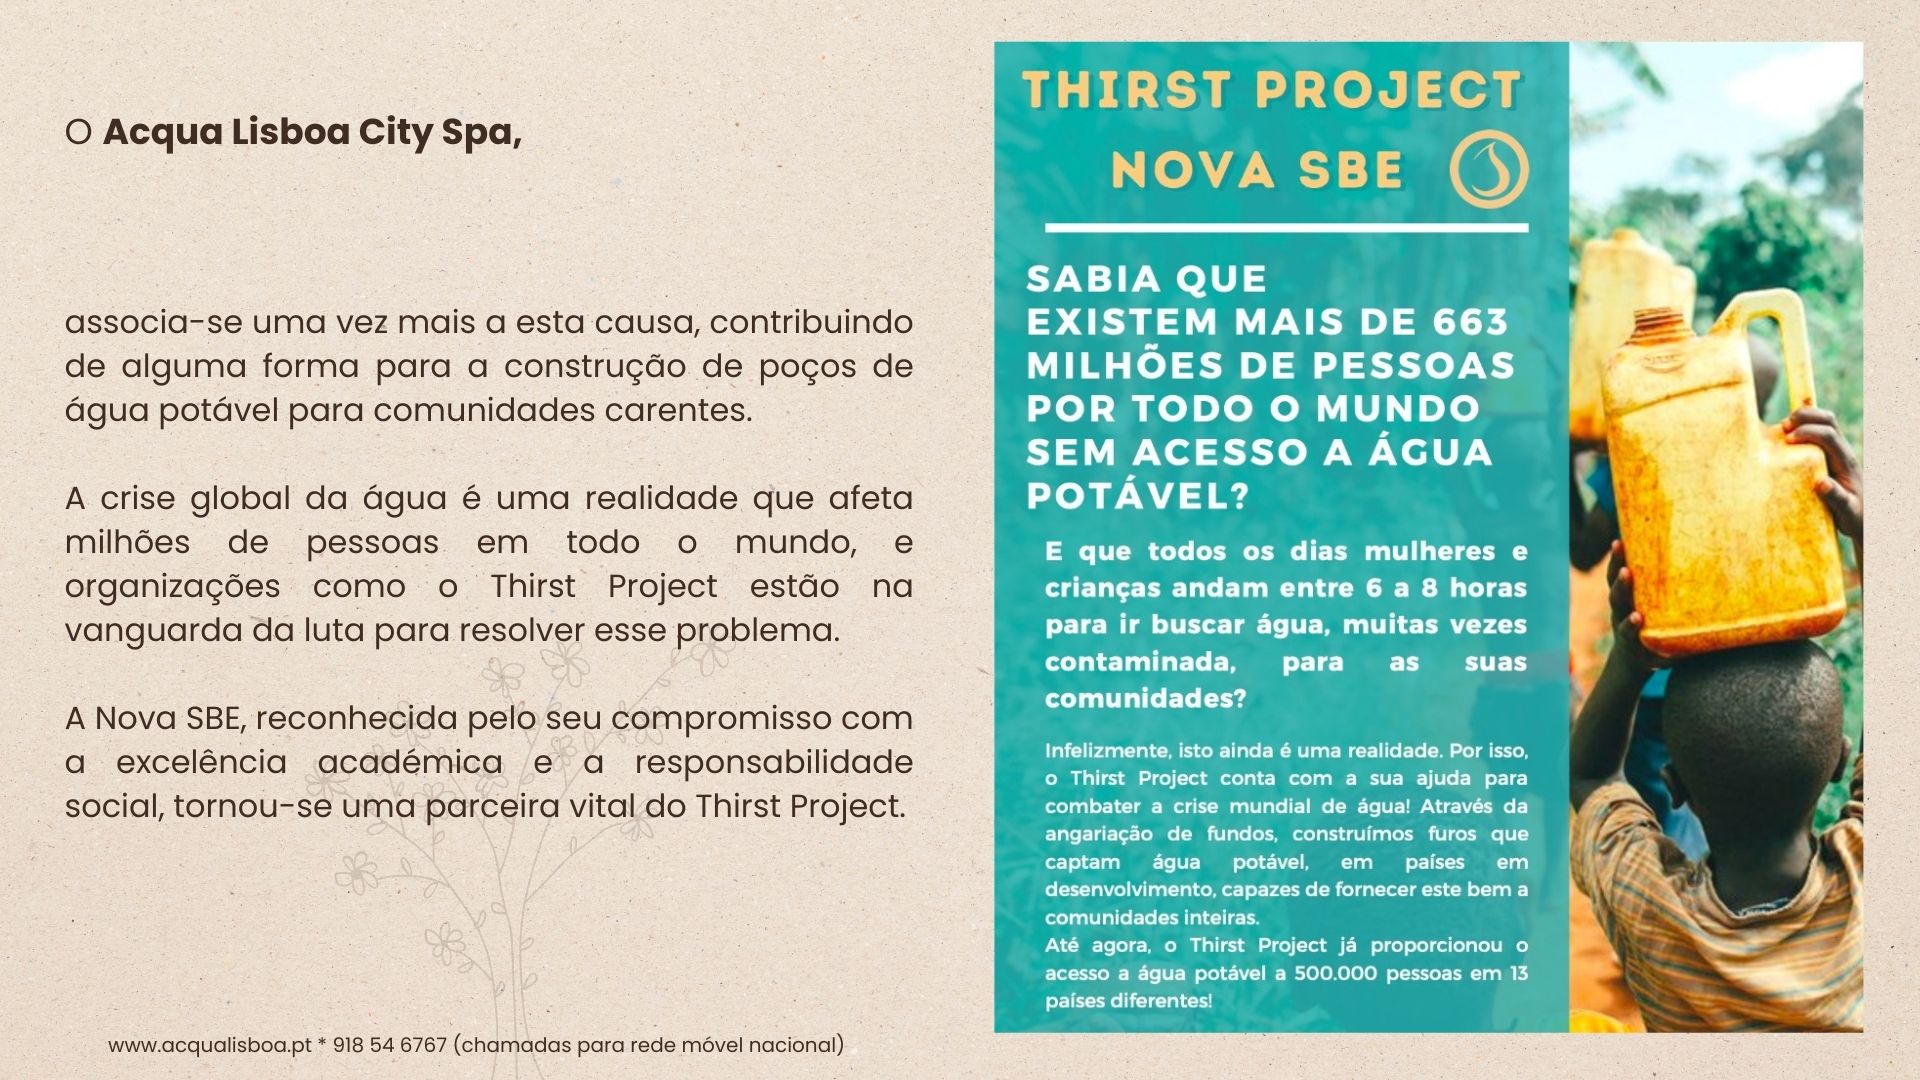 Thirst Project Nova SBE